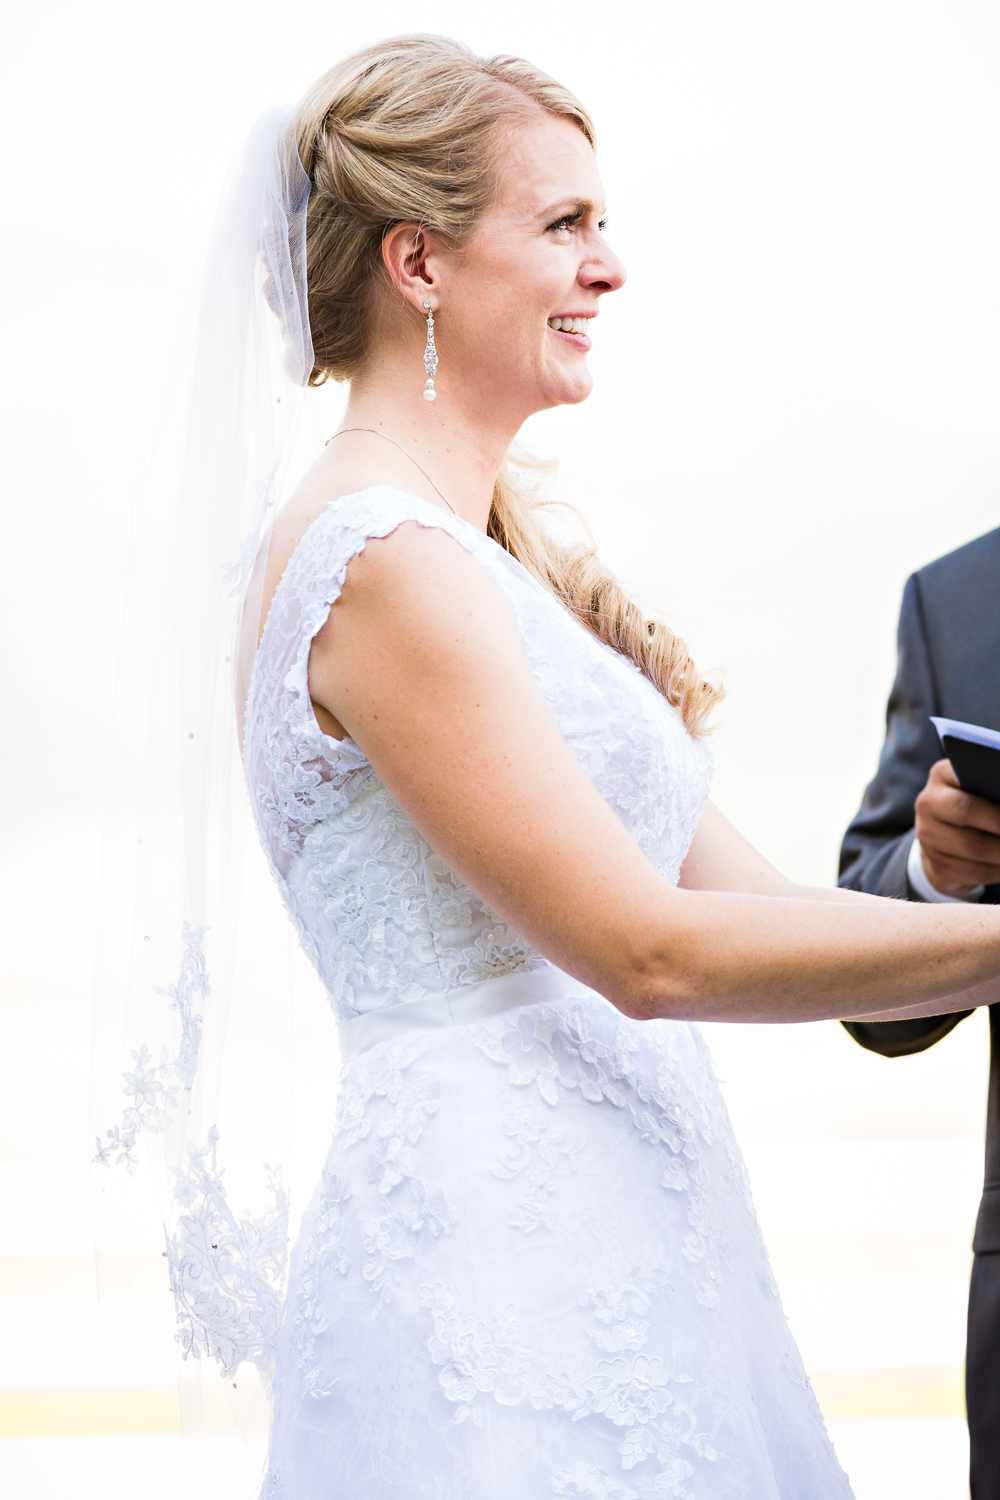 bozeman-montana-wedding-roys-barn-bride-during-ceremony.jpg